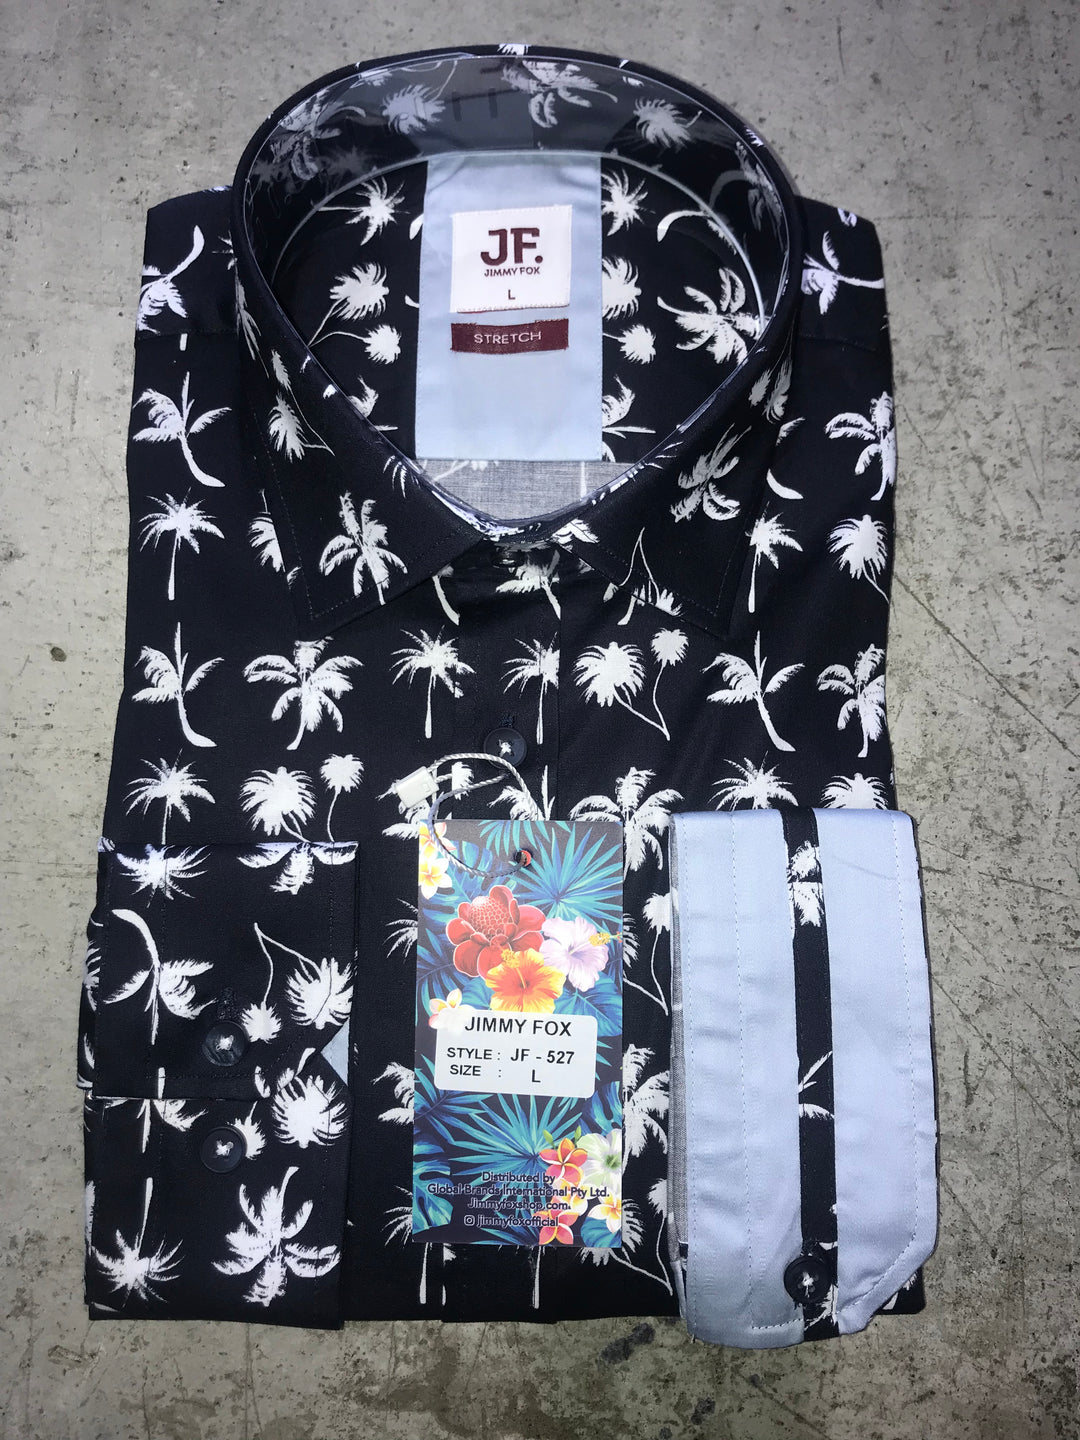 JF527 Jimmy Fox L/S Shirt 0922 - Chillis & More NZ